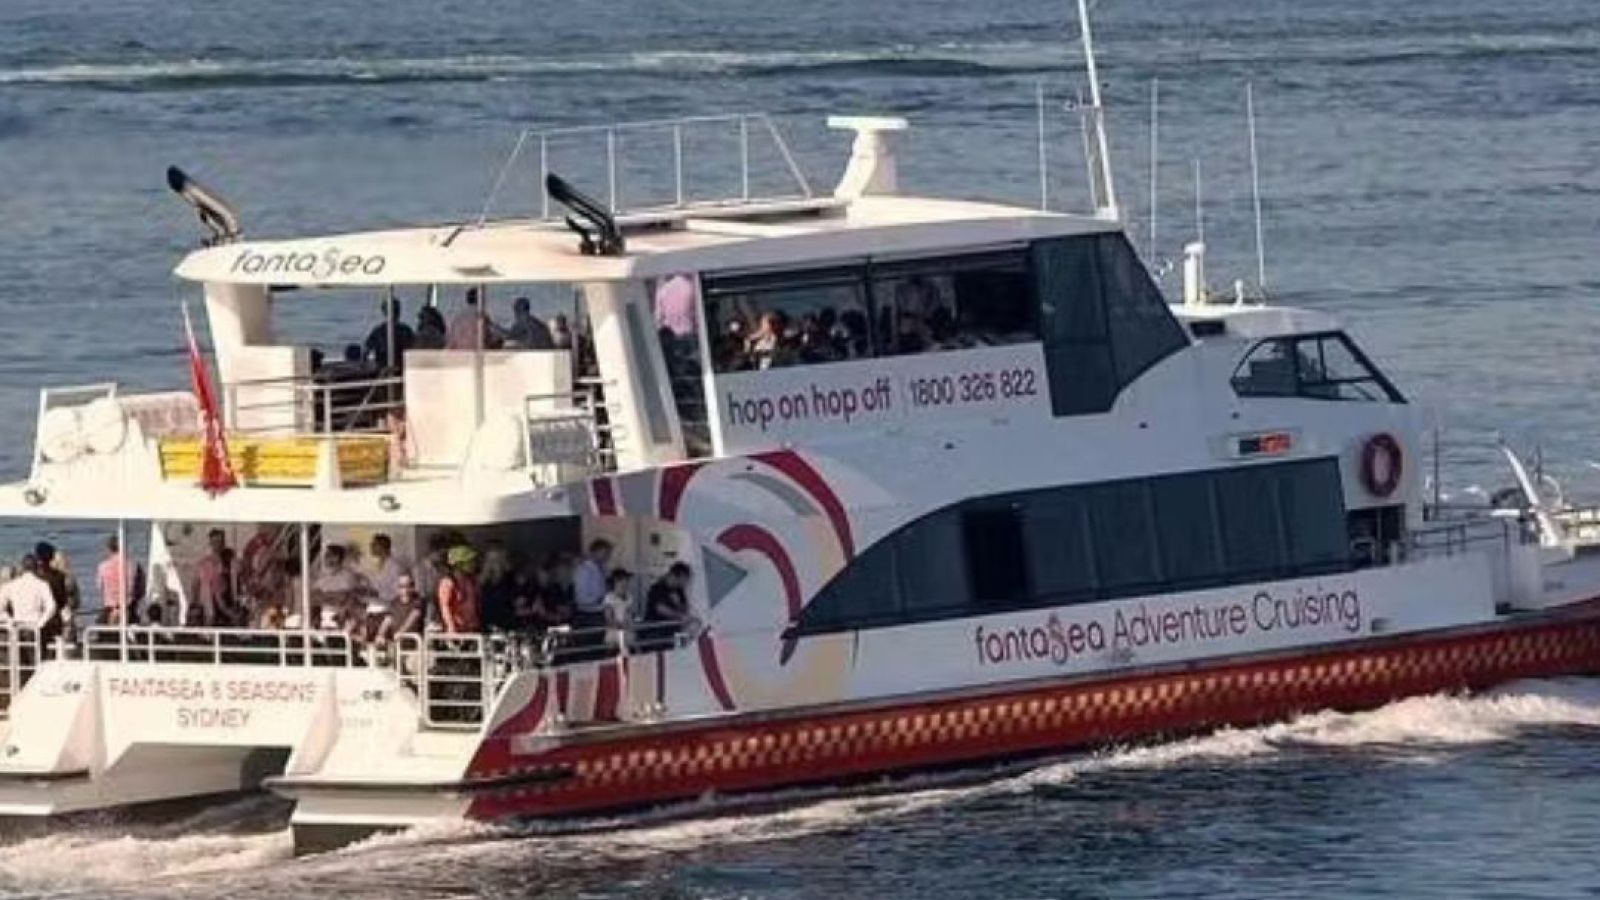 Fantasea 8 Seasons - NYE boat cruise on Sydney Harbour